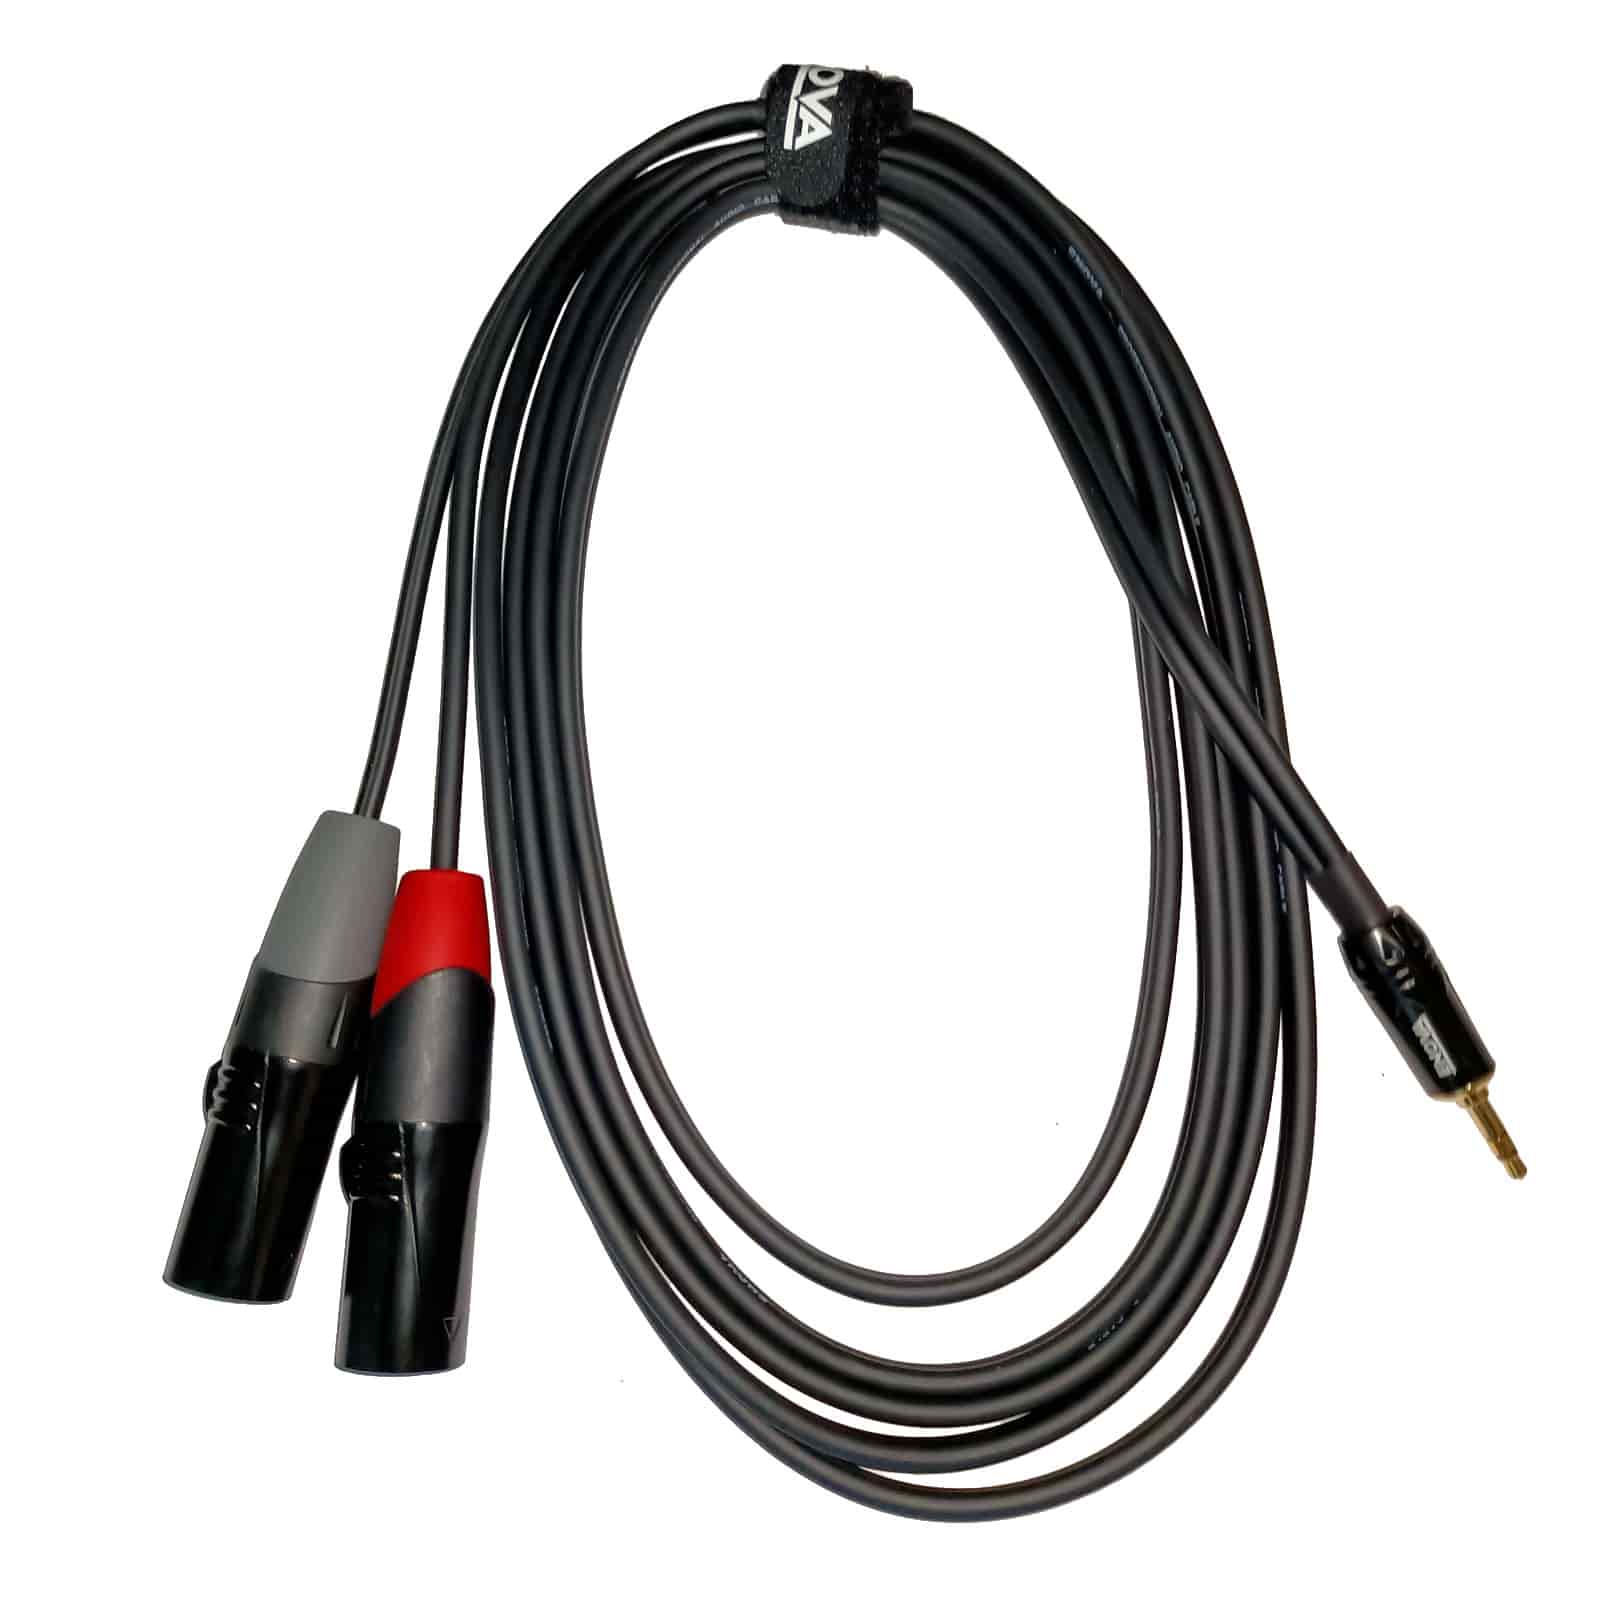 Cable de audio Jack 3,5 mm / 2x RCA machos - 10 m - Adaptador